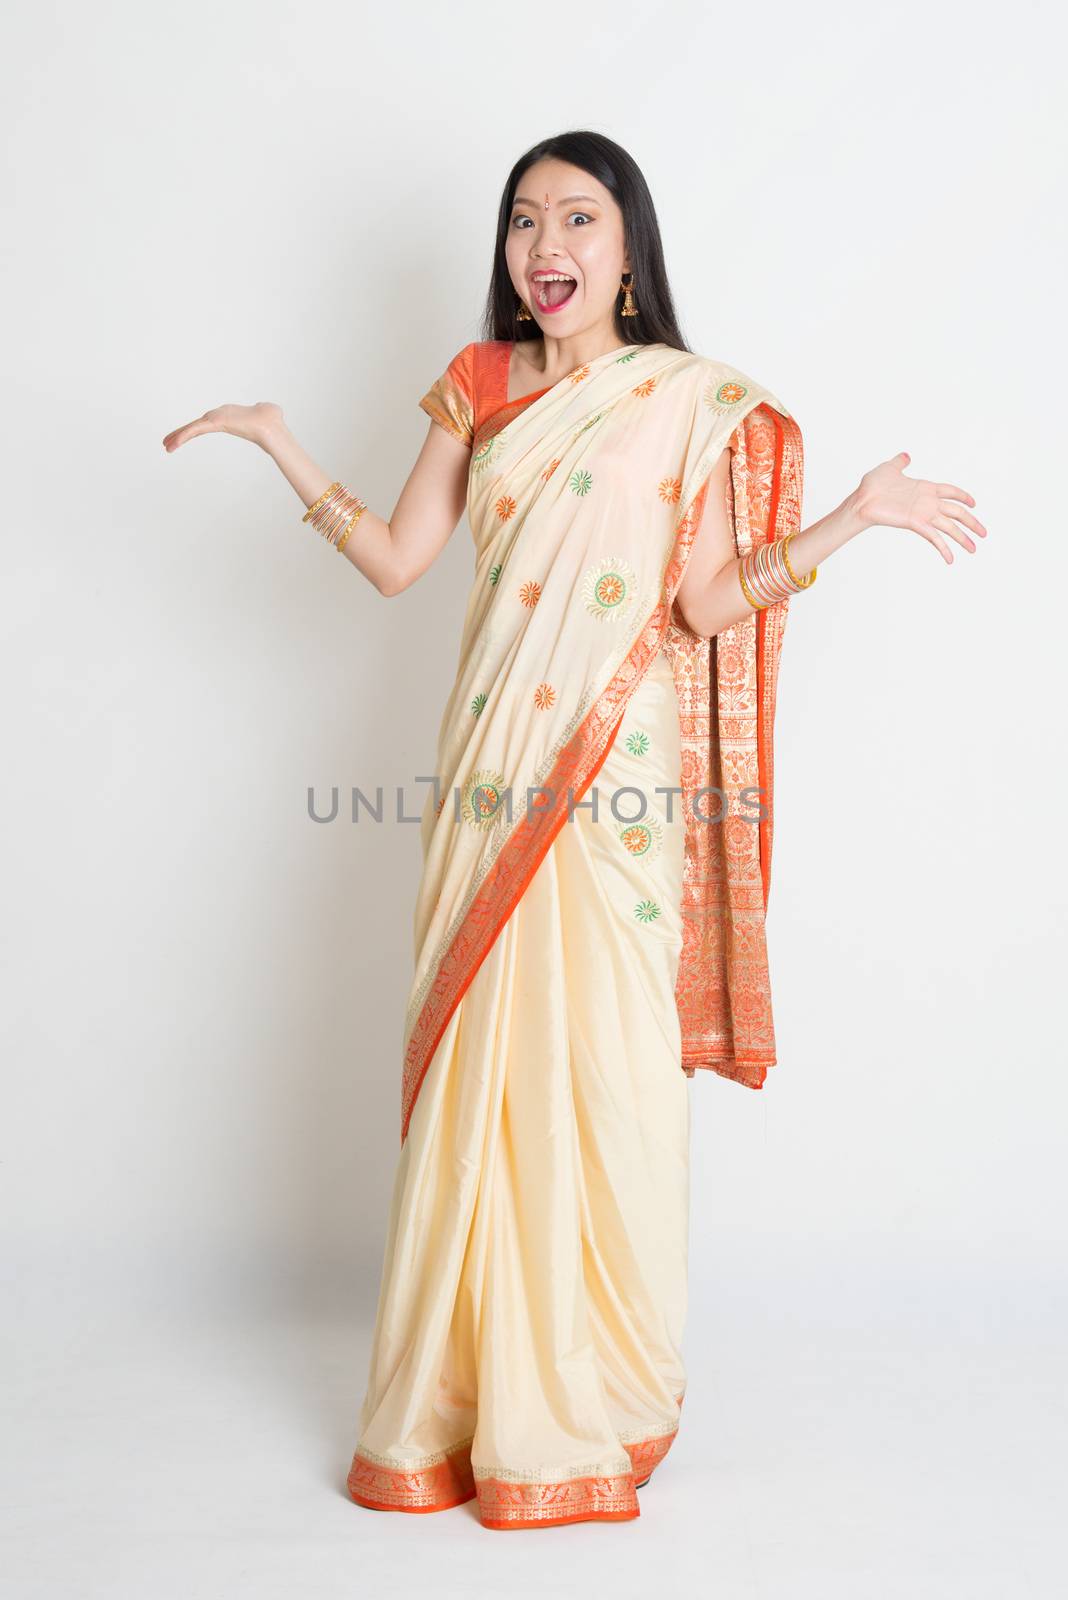 Shocked woman in Indian sari dress  by szefei